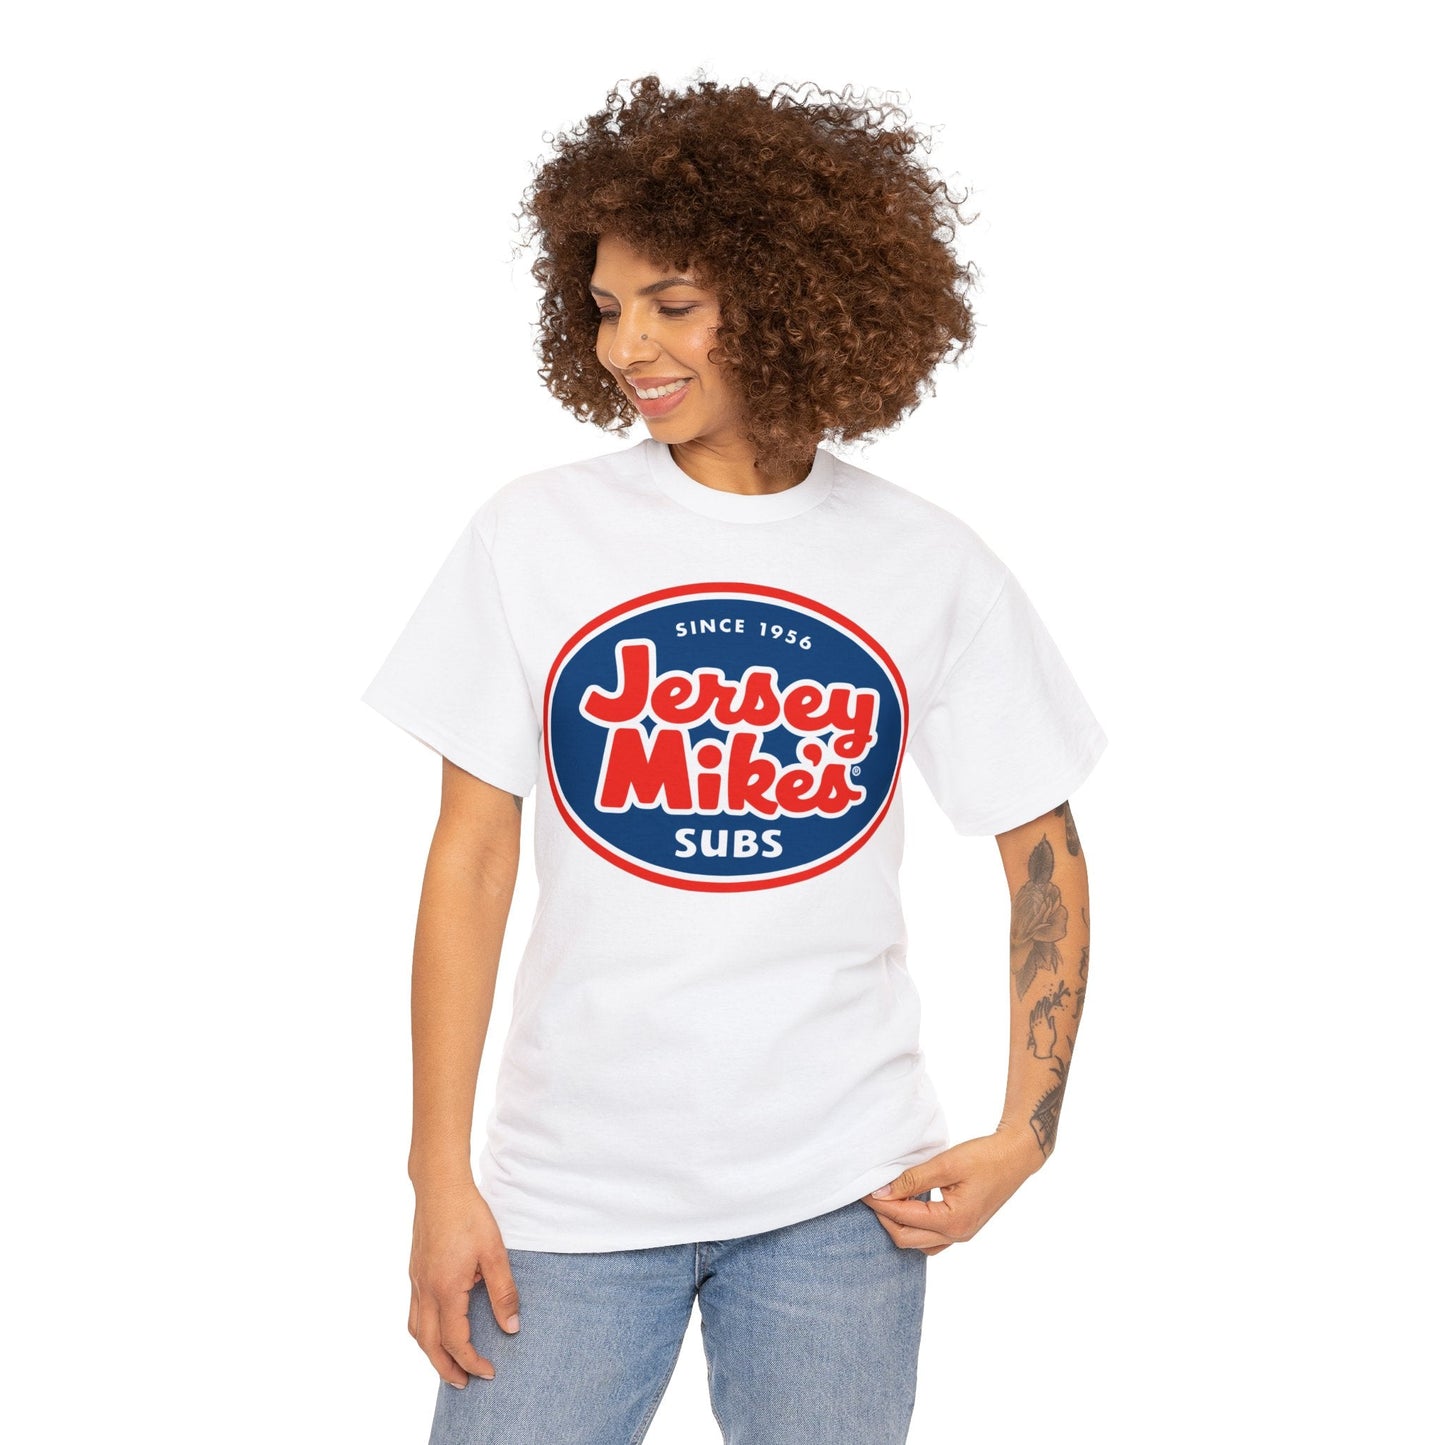 Jersey Mike's Subs Logo T-Shirt